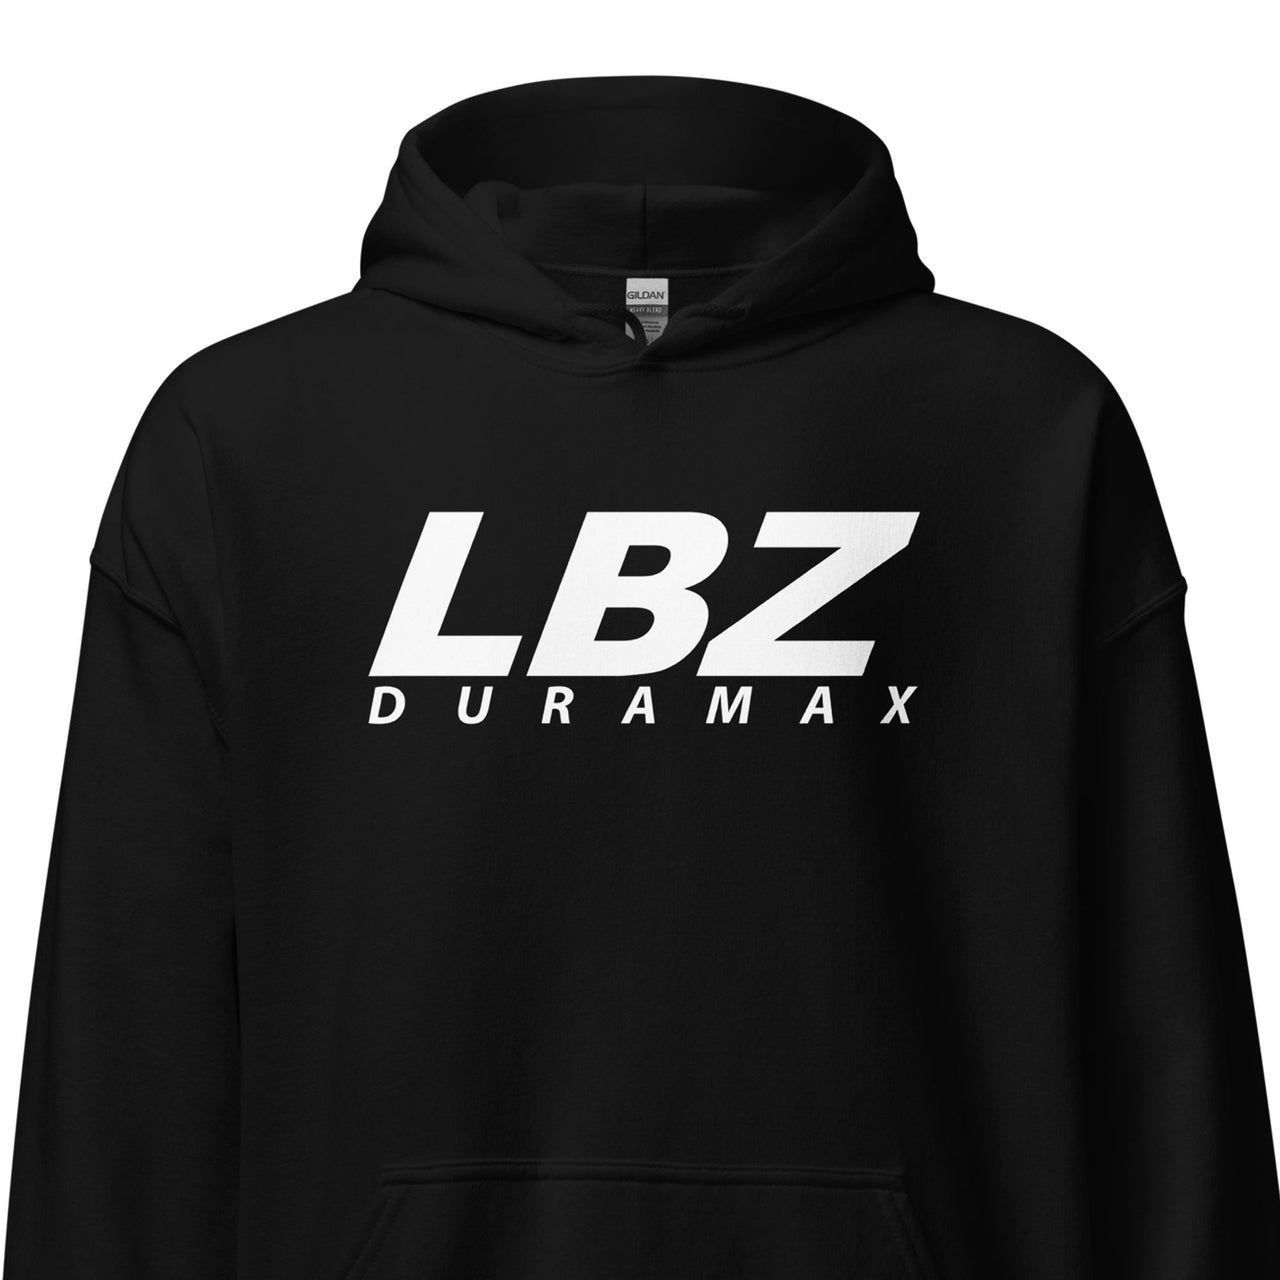 LBZ Duramax Hoodie With American Flag in Black